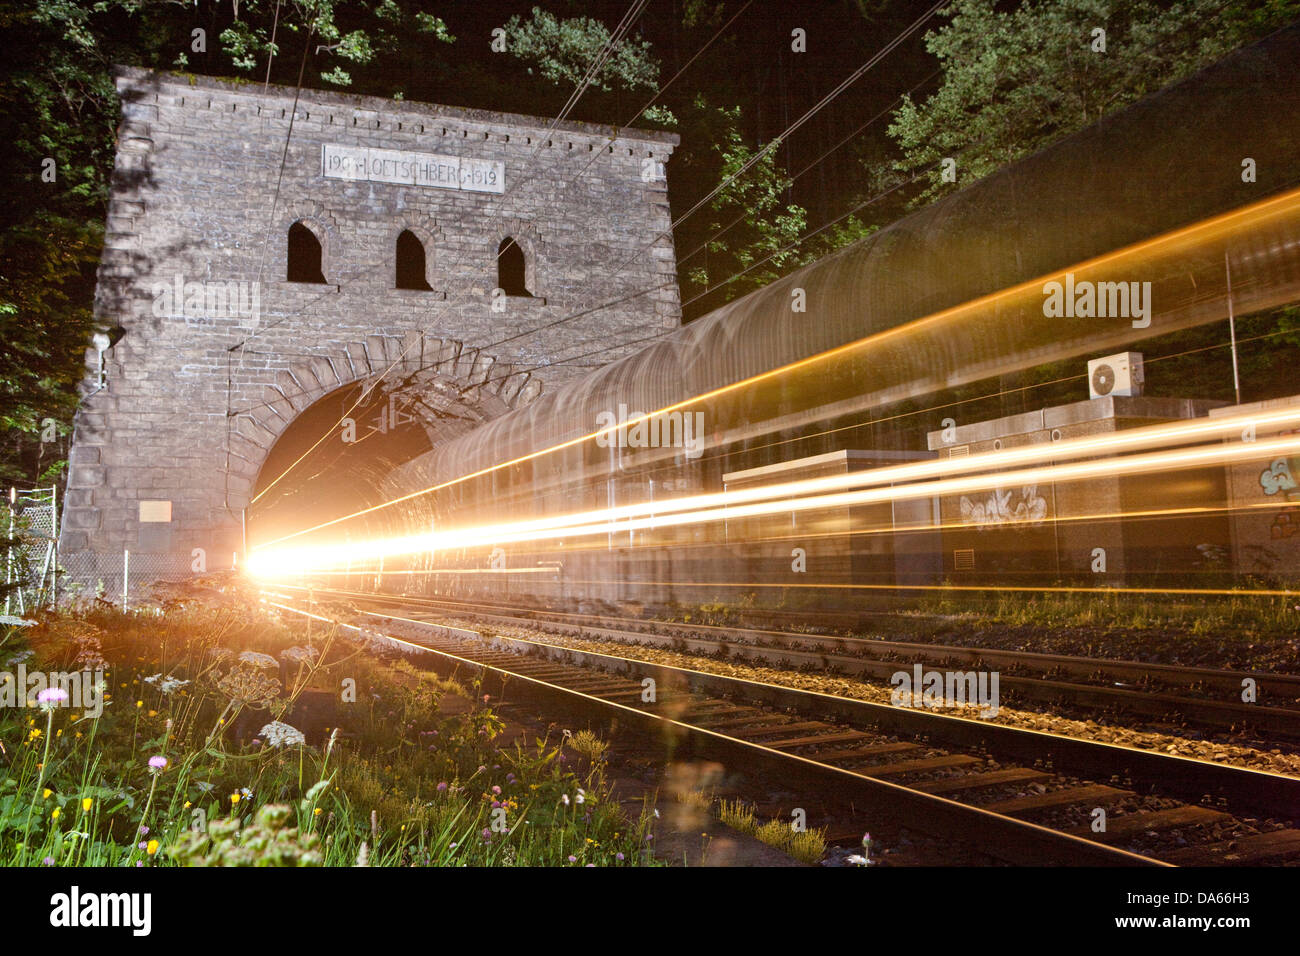 Nord ingresso principale, tunnel, Kandersteg, stradali, ferroviarie, Treno, Ferrovia, Lötschberg BLS, Svizzera, Europa, Oberland bernese, Foto Stock